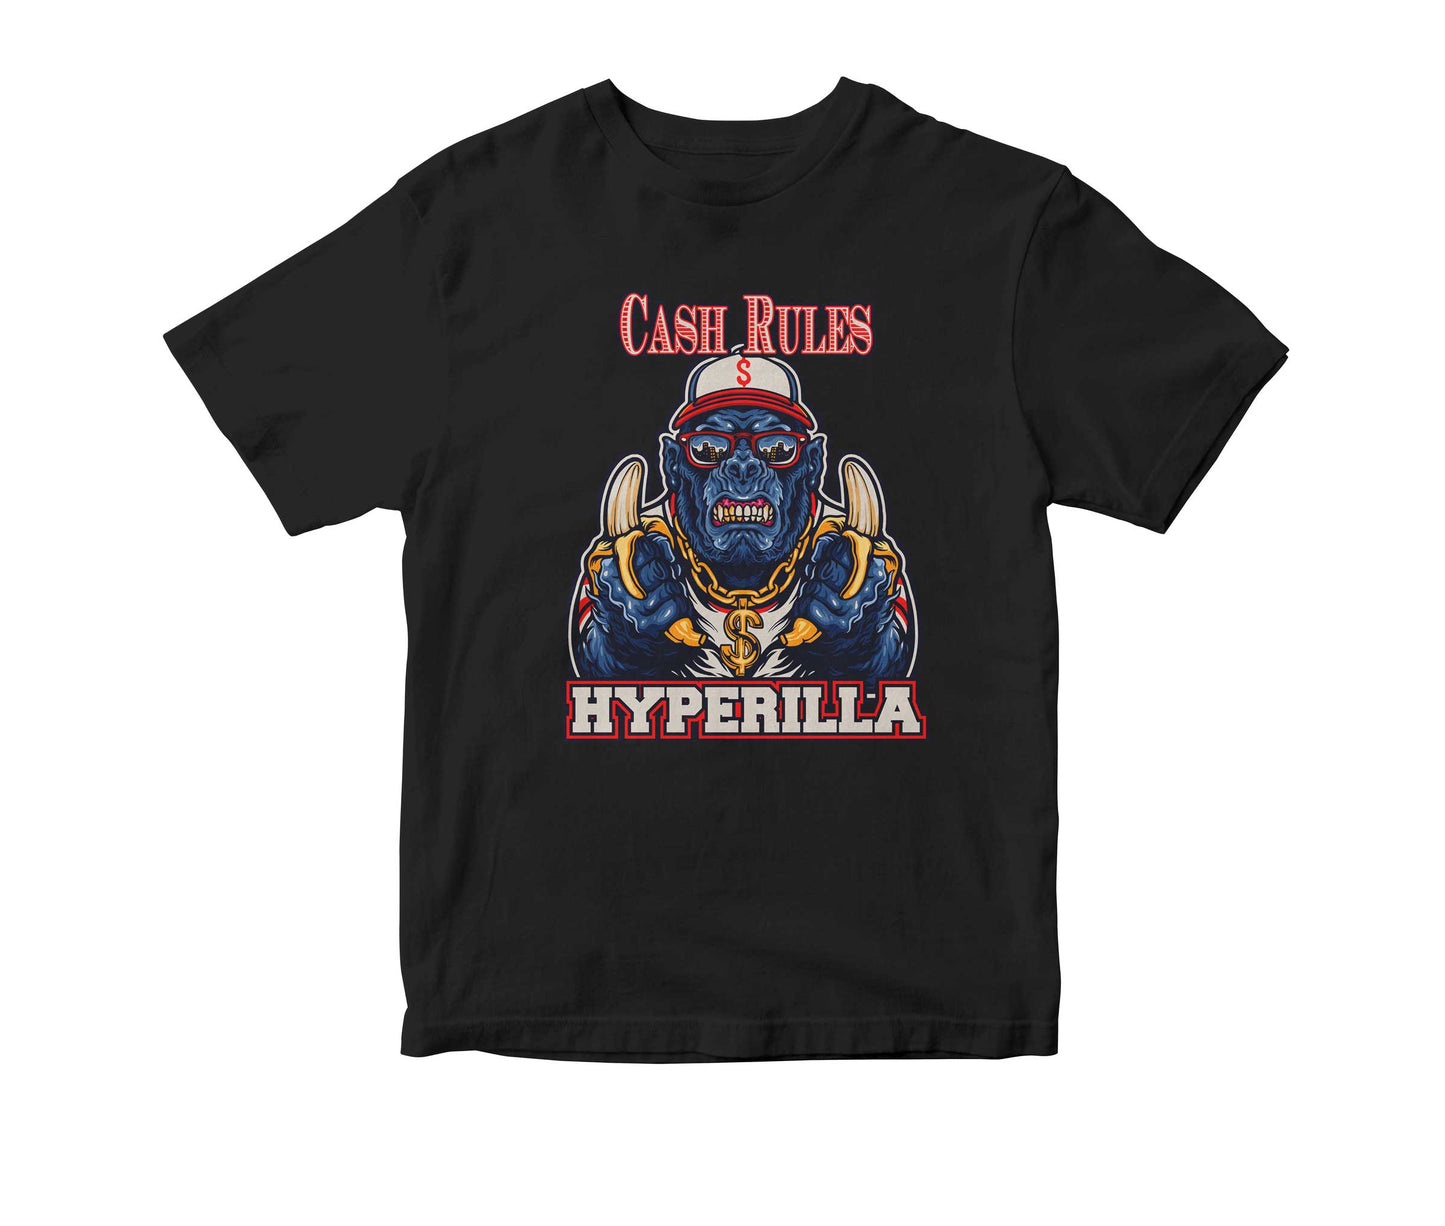 Cash Rules The HyperRilla Kids Unisex T-Shirt